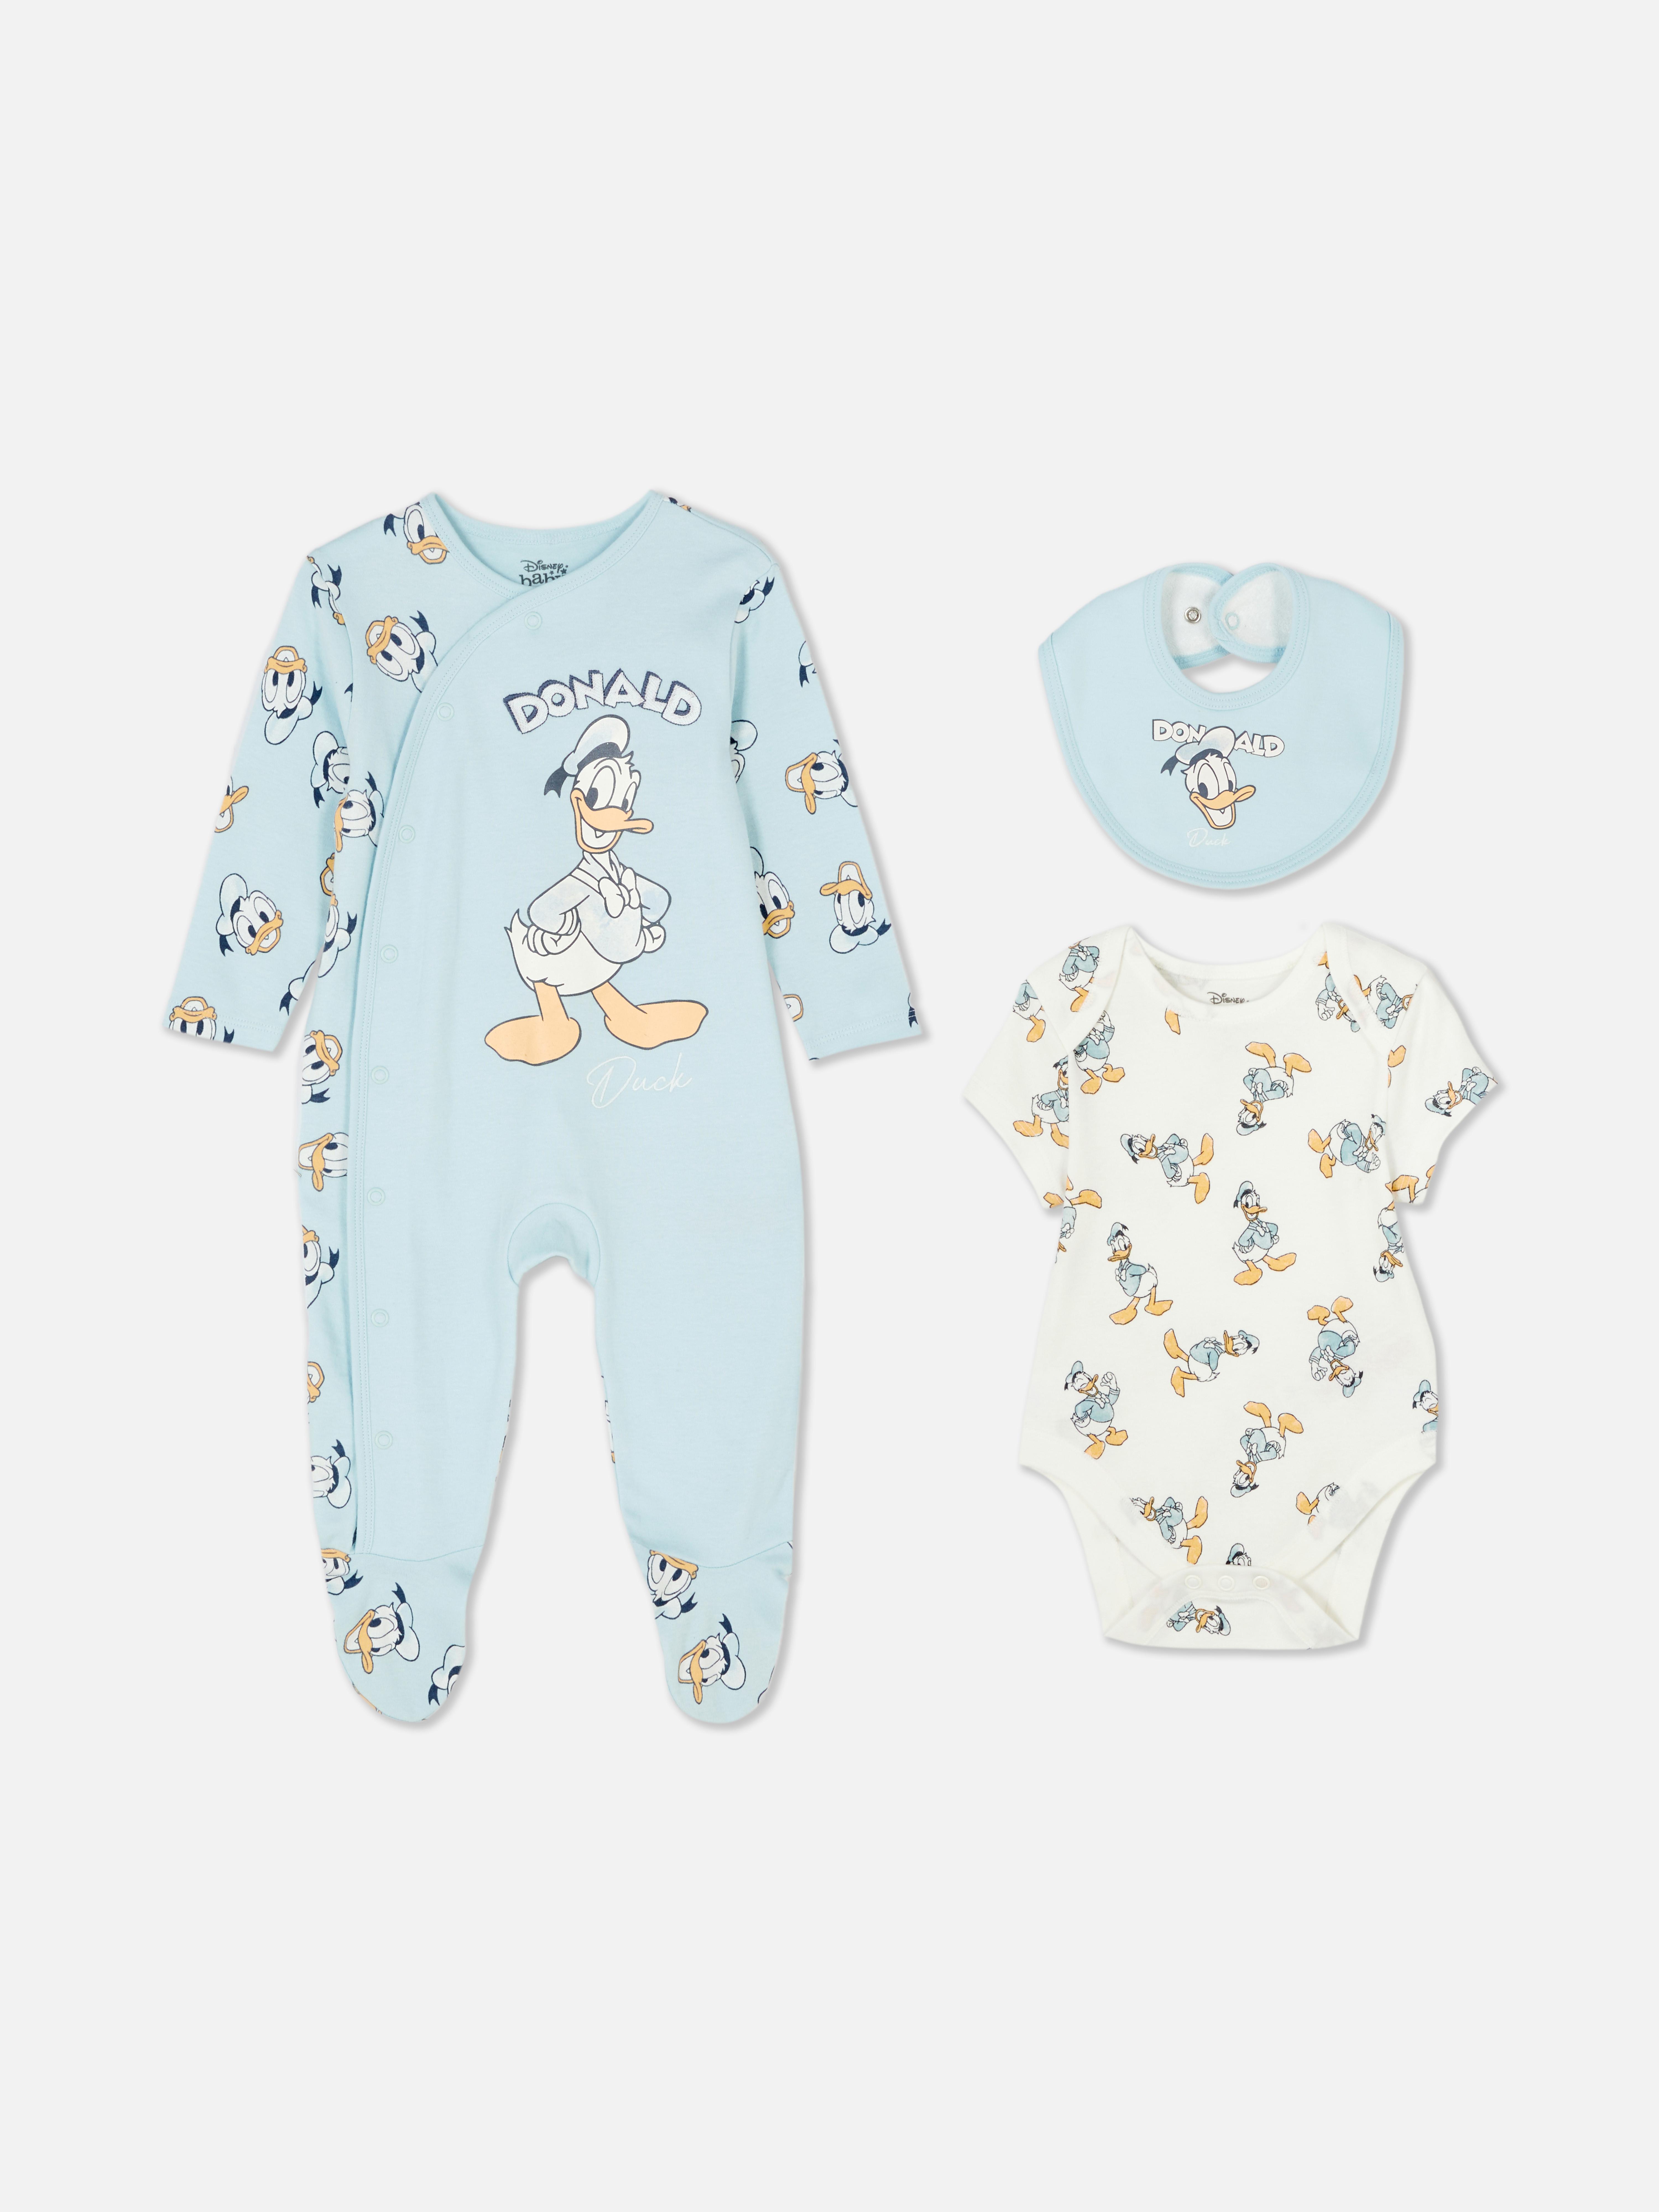 Disney’s Donald Duck Sleepsuit, Bodysuit and Bib Set